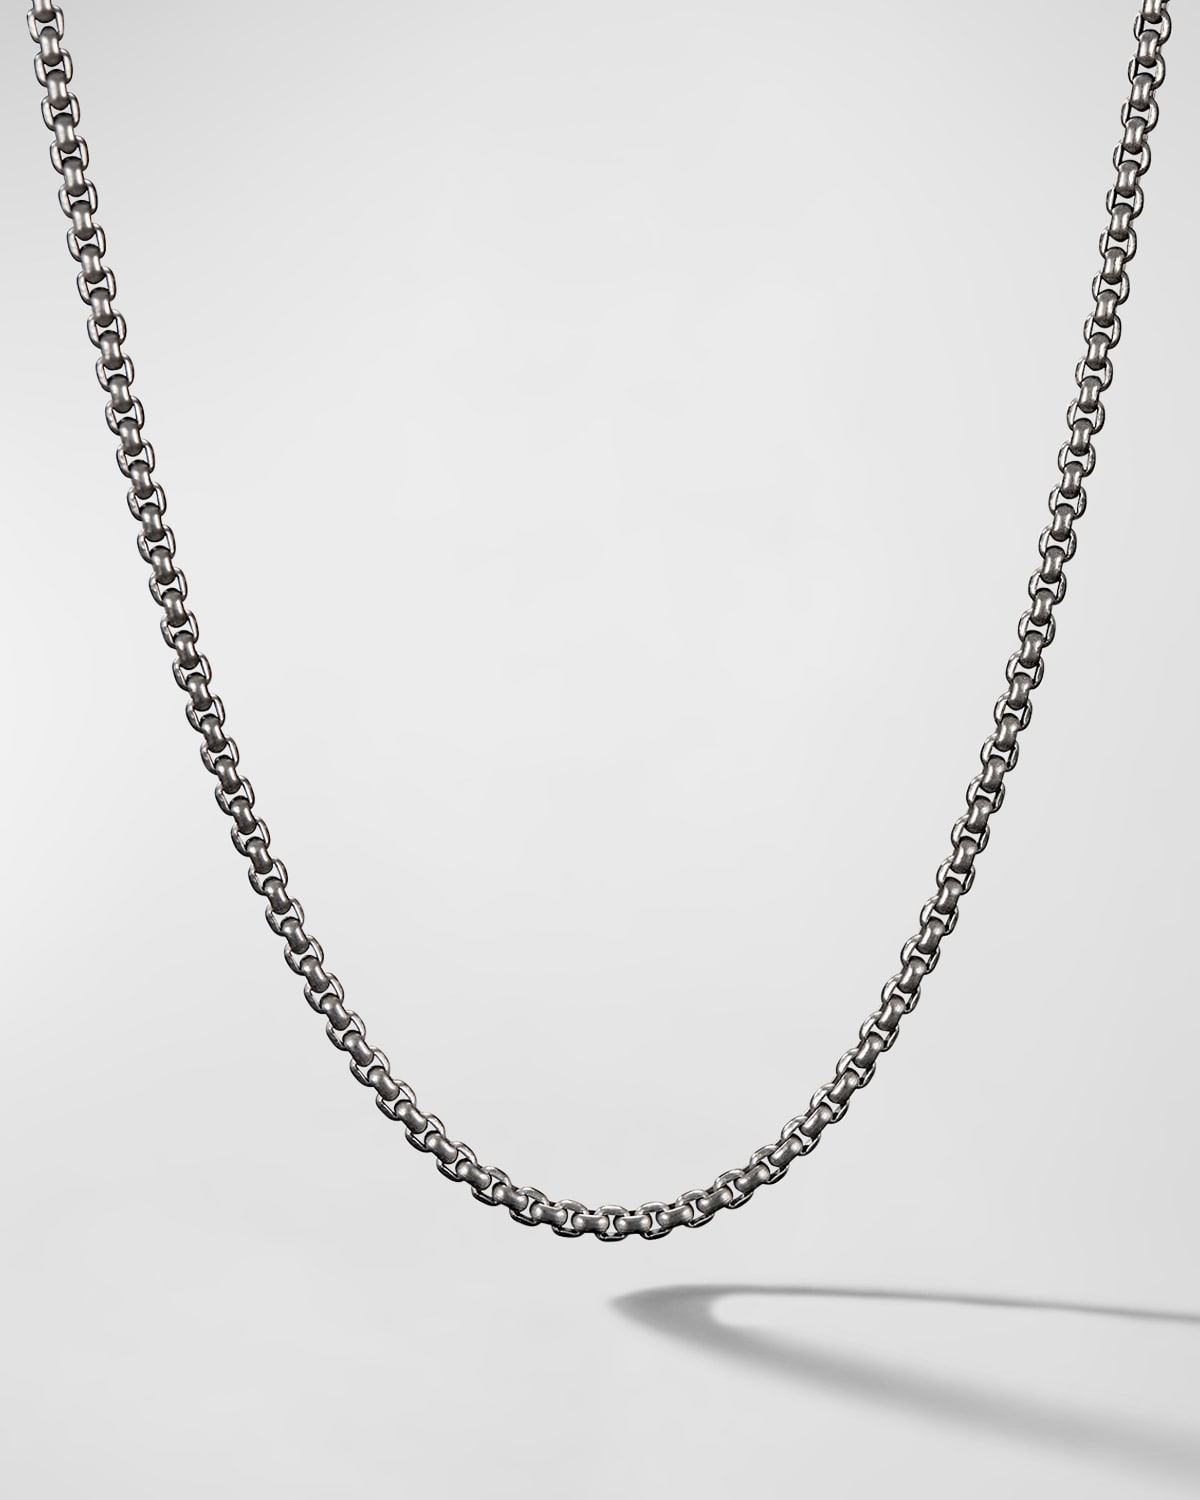 Men's Box Chain Necklace in Grey Titanium, 2.7mm, 18"L